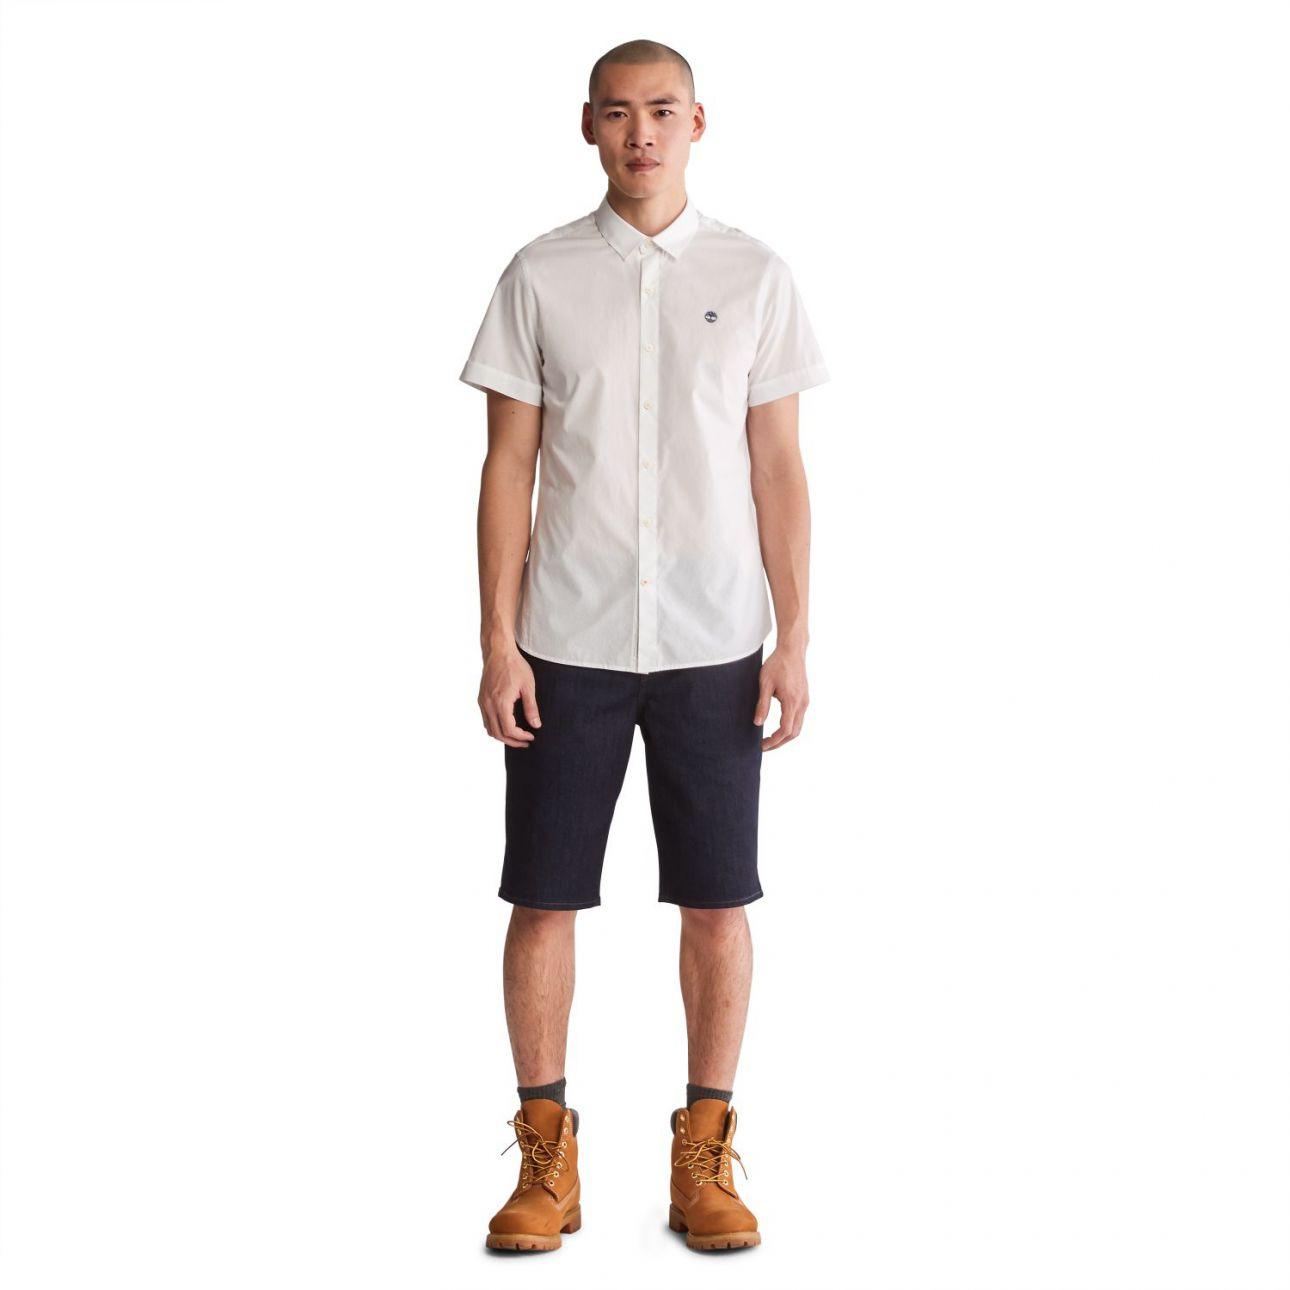 TIMBERLAND - חולצה מכופתרת קצרה עם לוגו בצבע לבן - MASHBIR//365